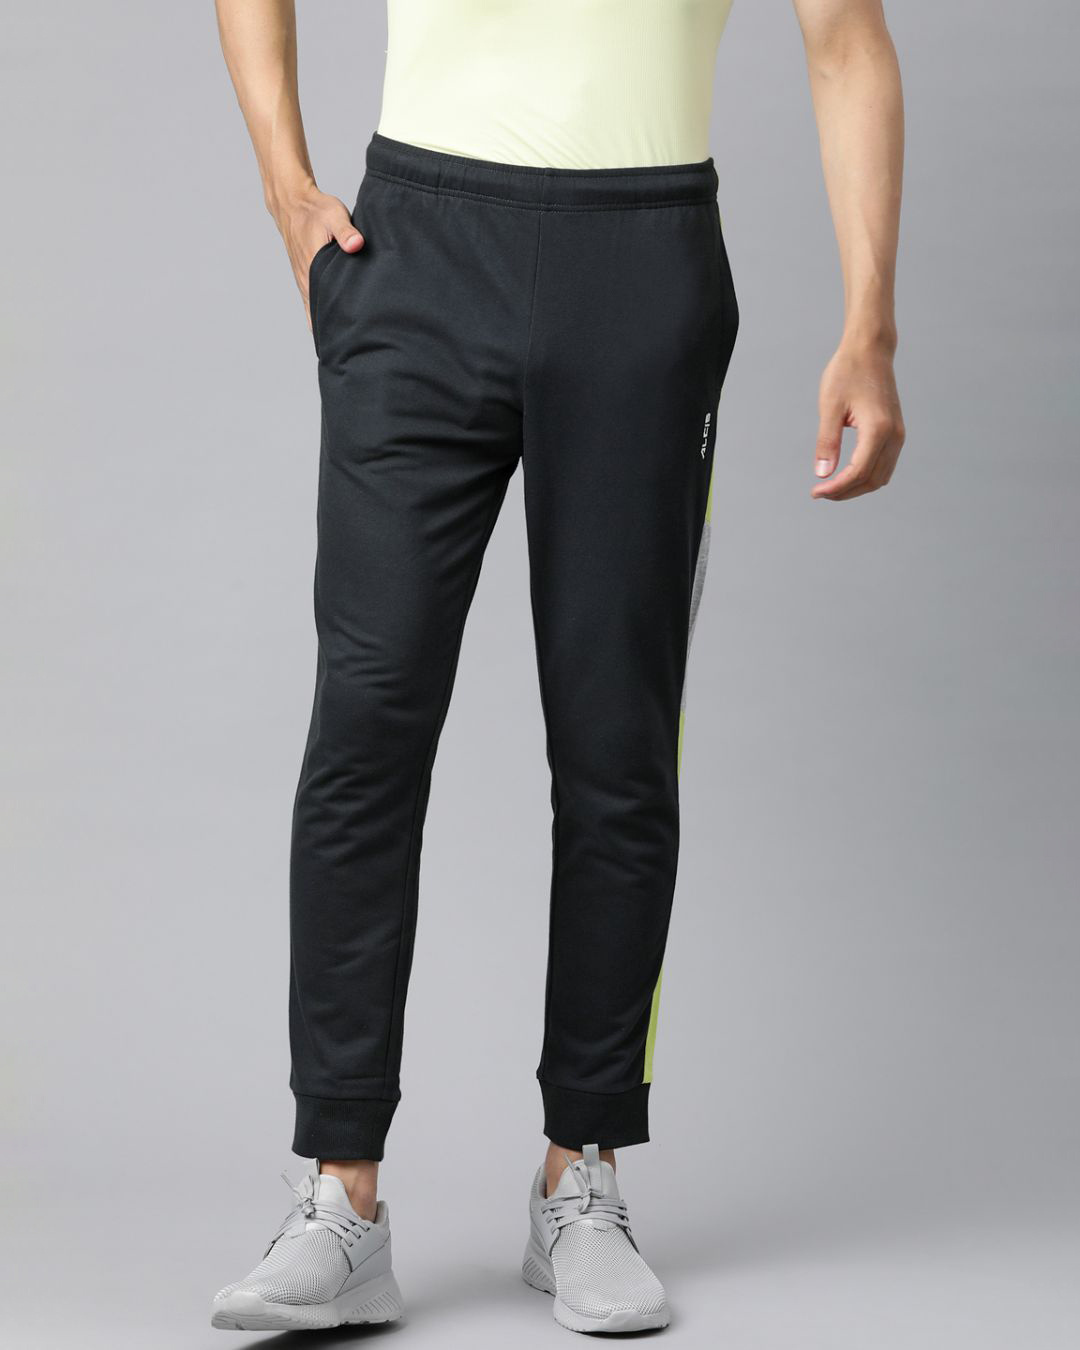 Buy Men's Charcoal Grey Solid Slim Fit Joggers for Men Online at Bewakoof